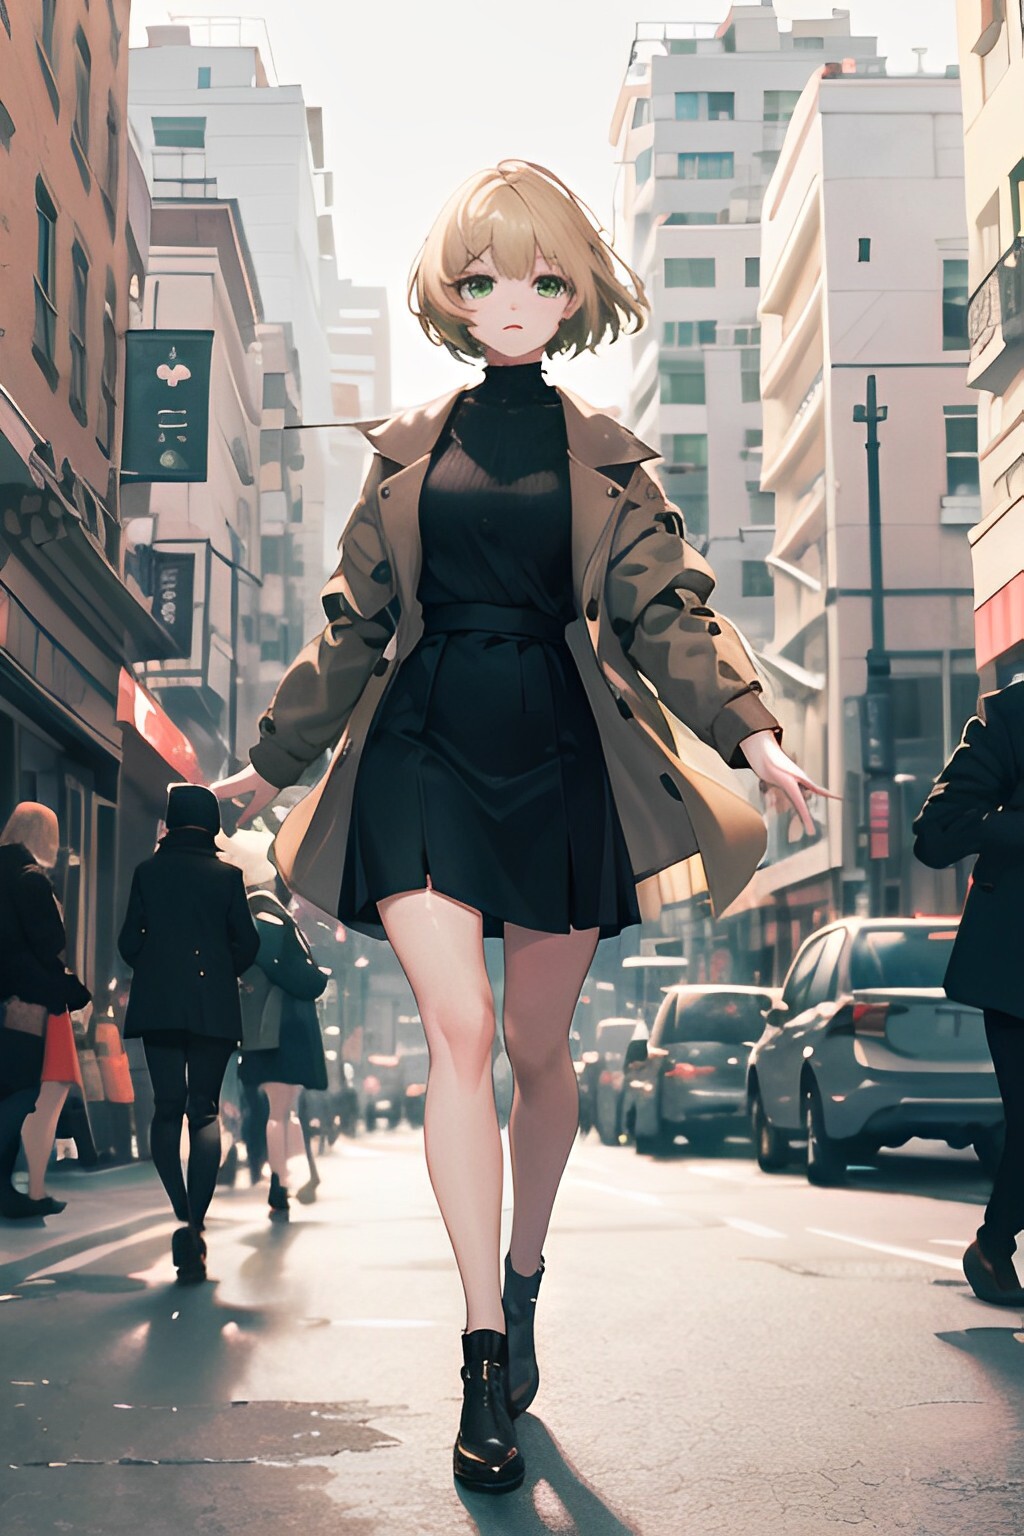 An anime girl in a school uniform, walking through a | Stable Diffusion